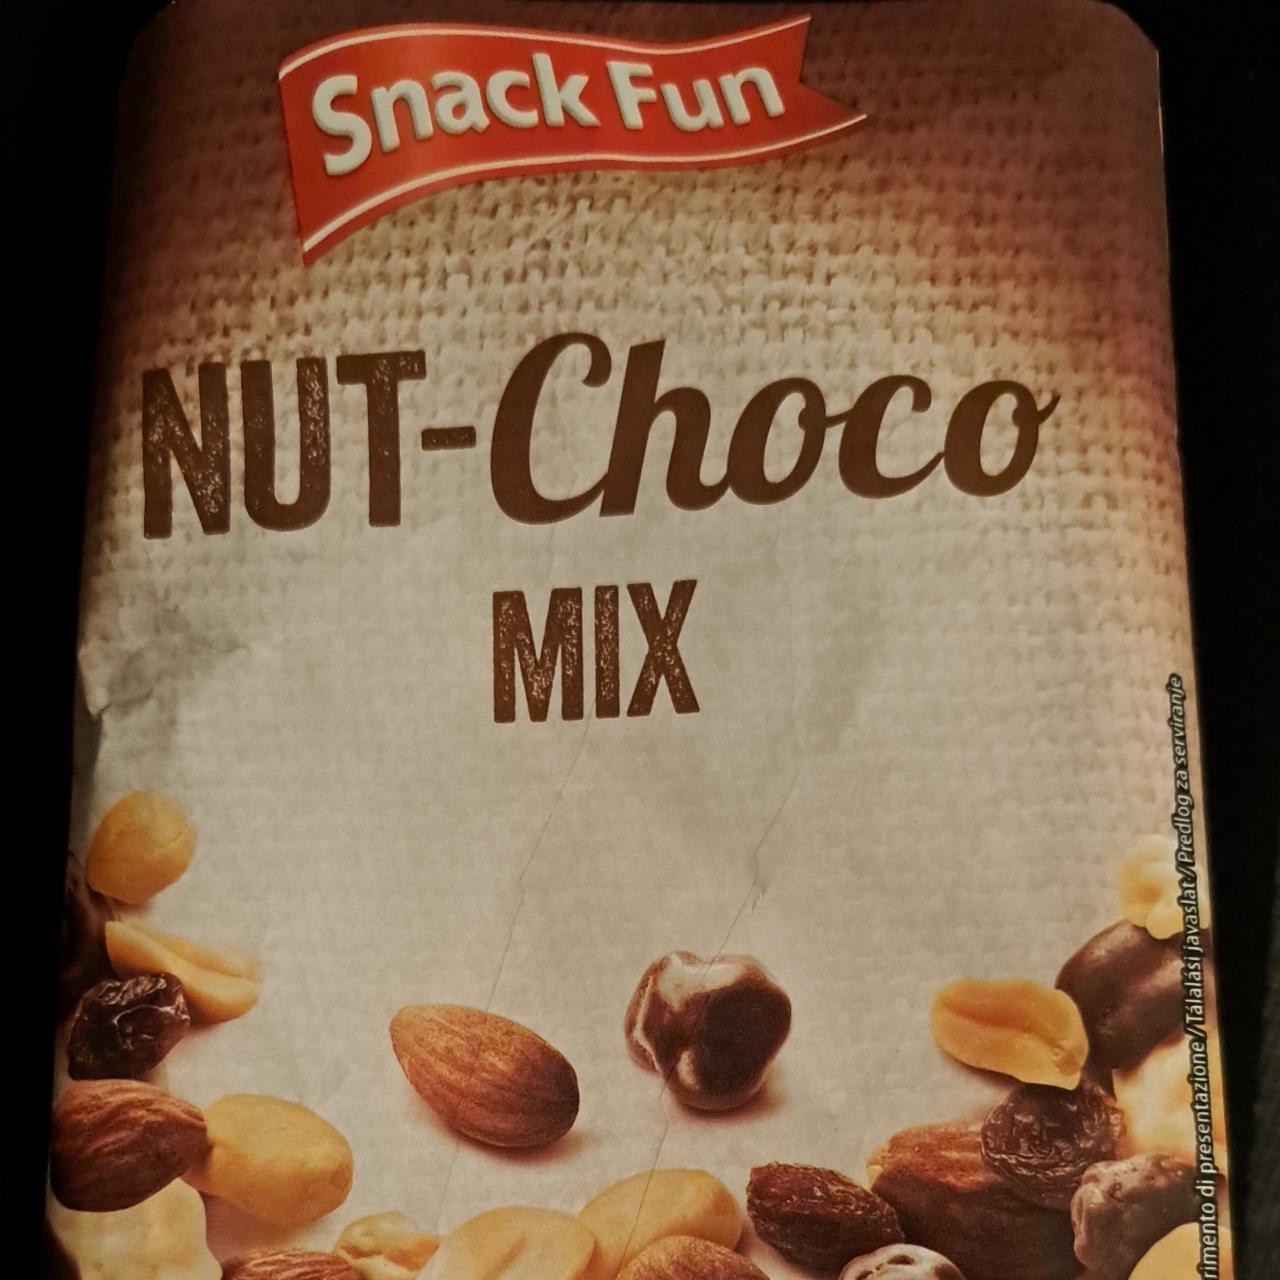 Képek - Nut choco mix Snack Fun